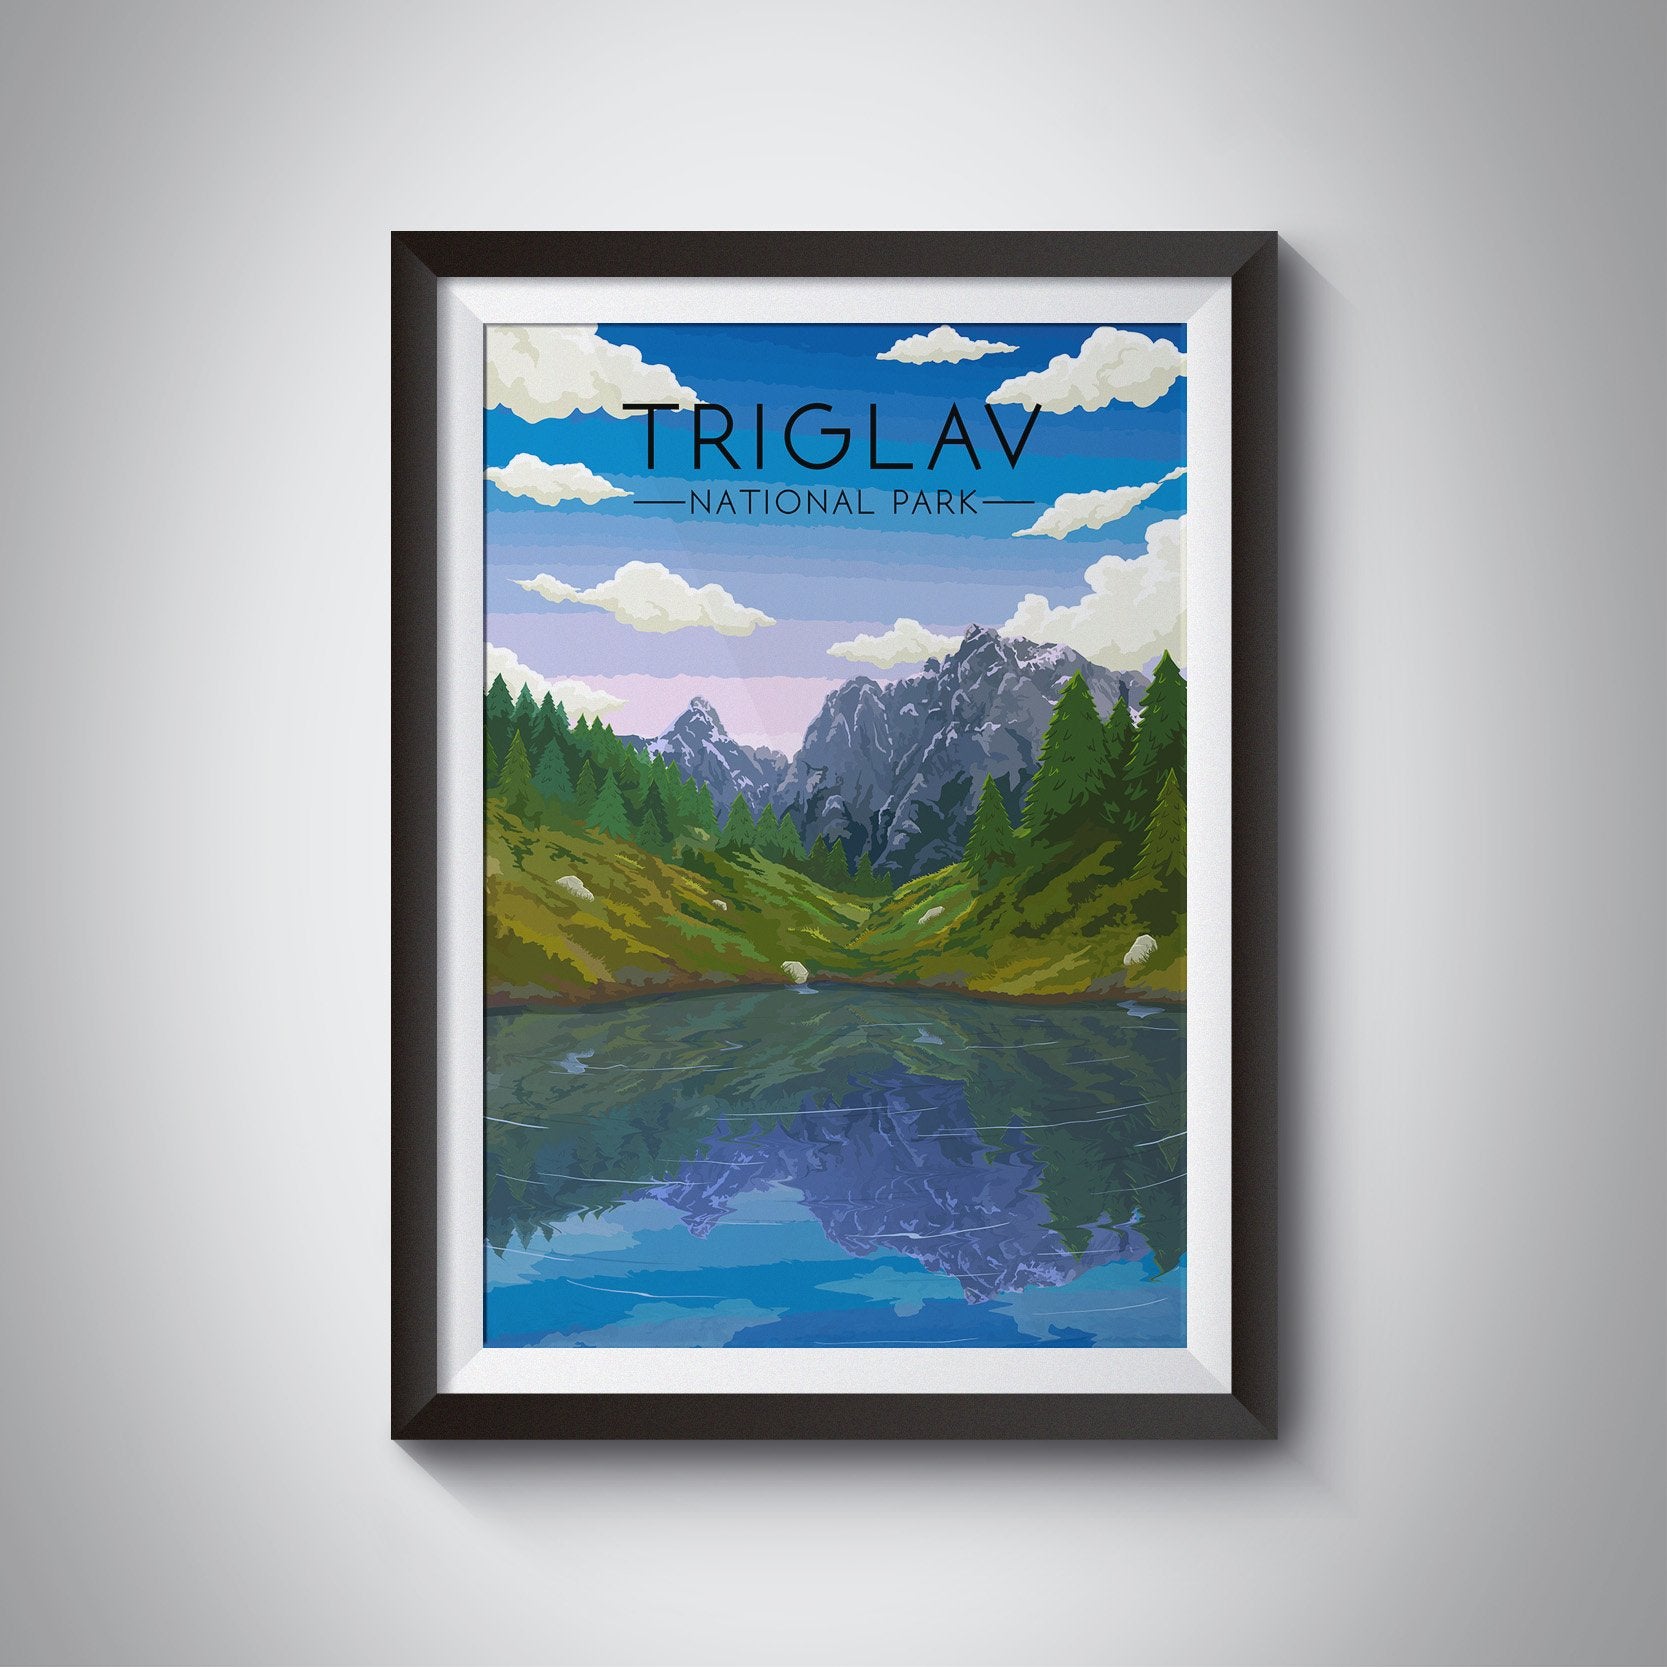 Triglav National Park Travel Poster, Slovenia